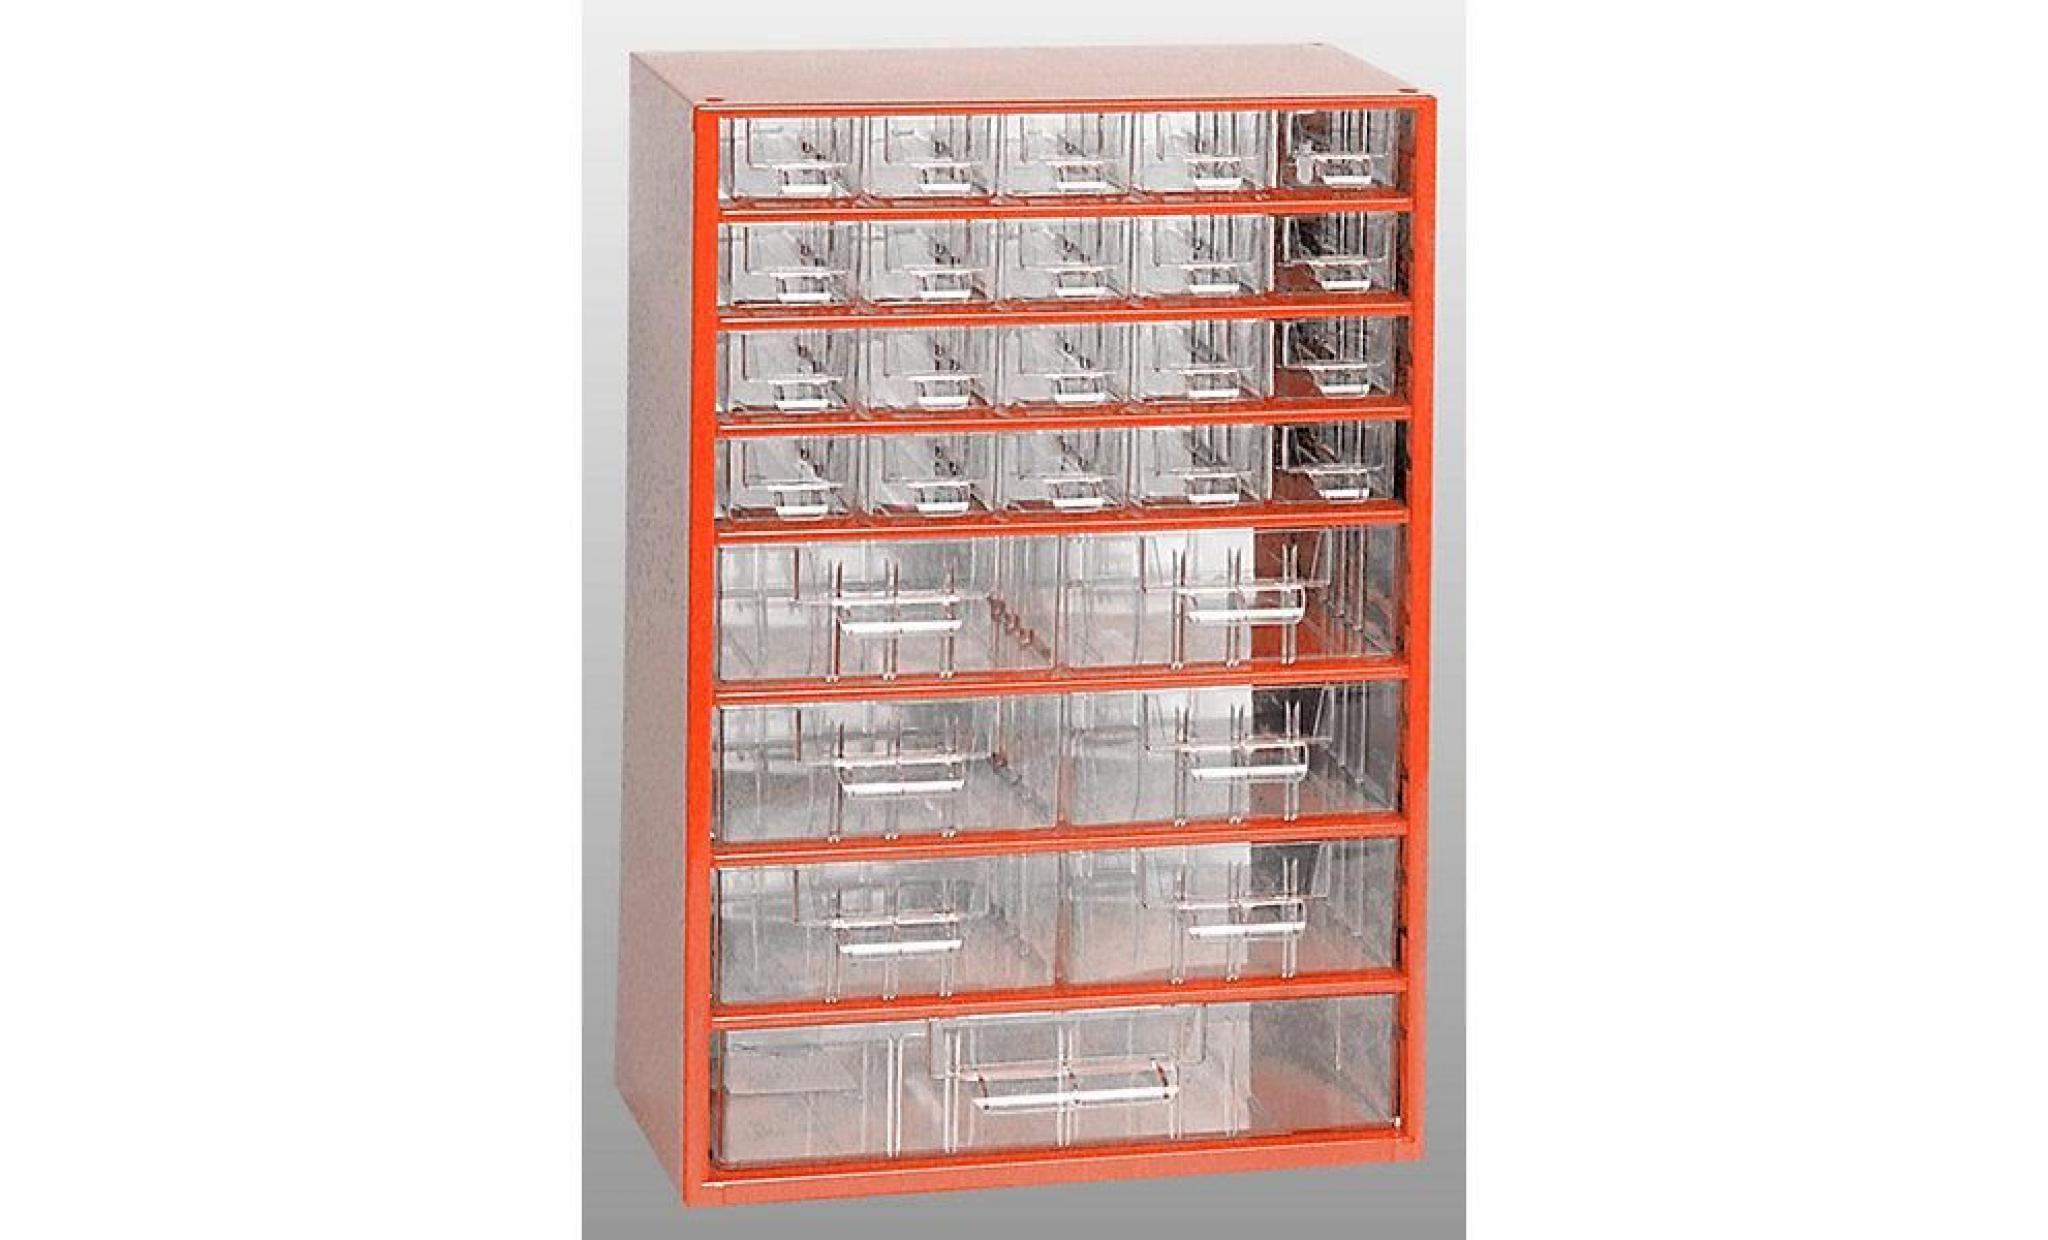 bloc tiroirs   h x l 460 x 306 mm, 27 tiroirs orange   bloc bloc transparent bloc tiroirs blocs blocs transparents blocs tiroirs